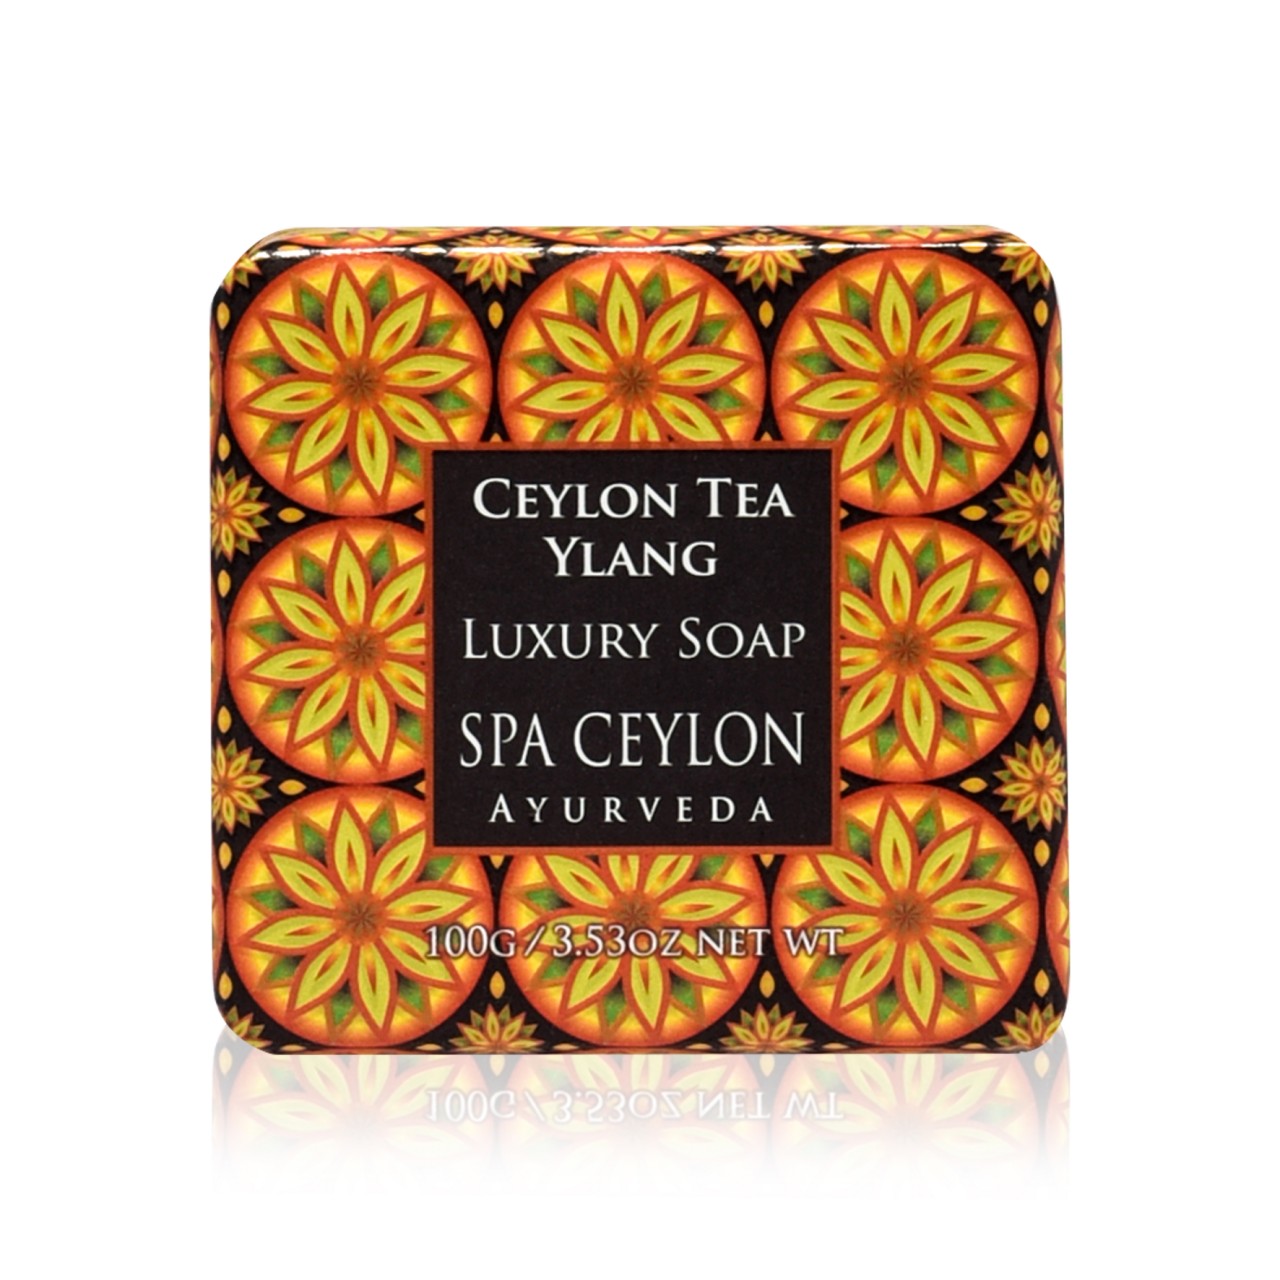 Ceylon Tea Ylang Luxury Soap